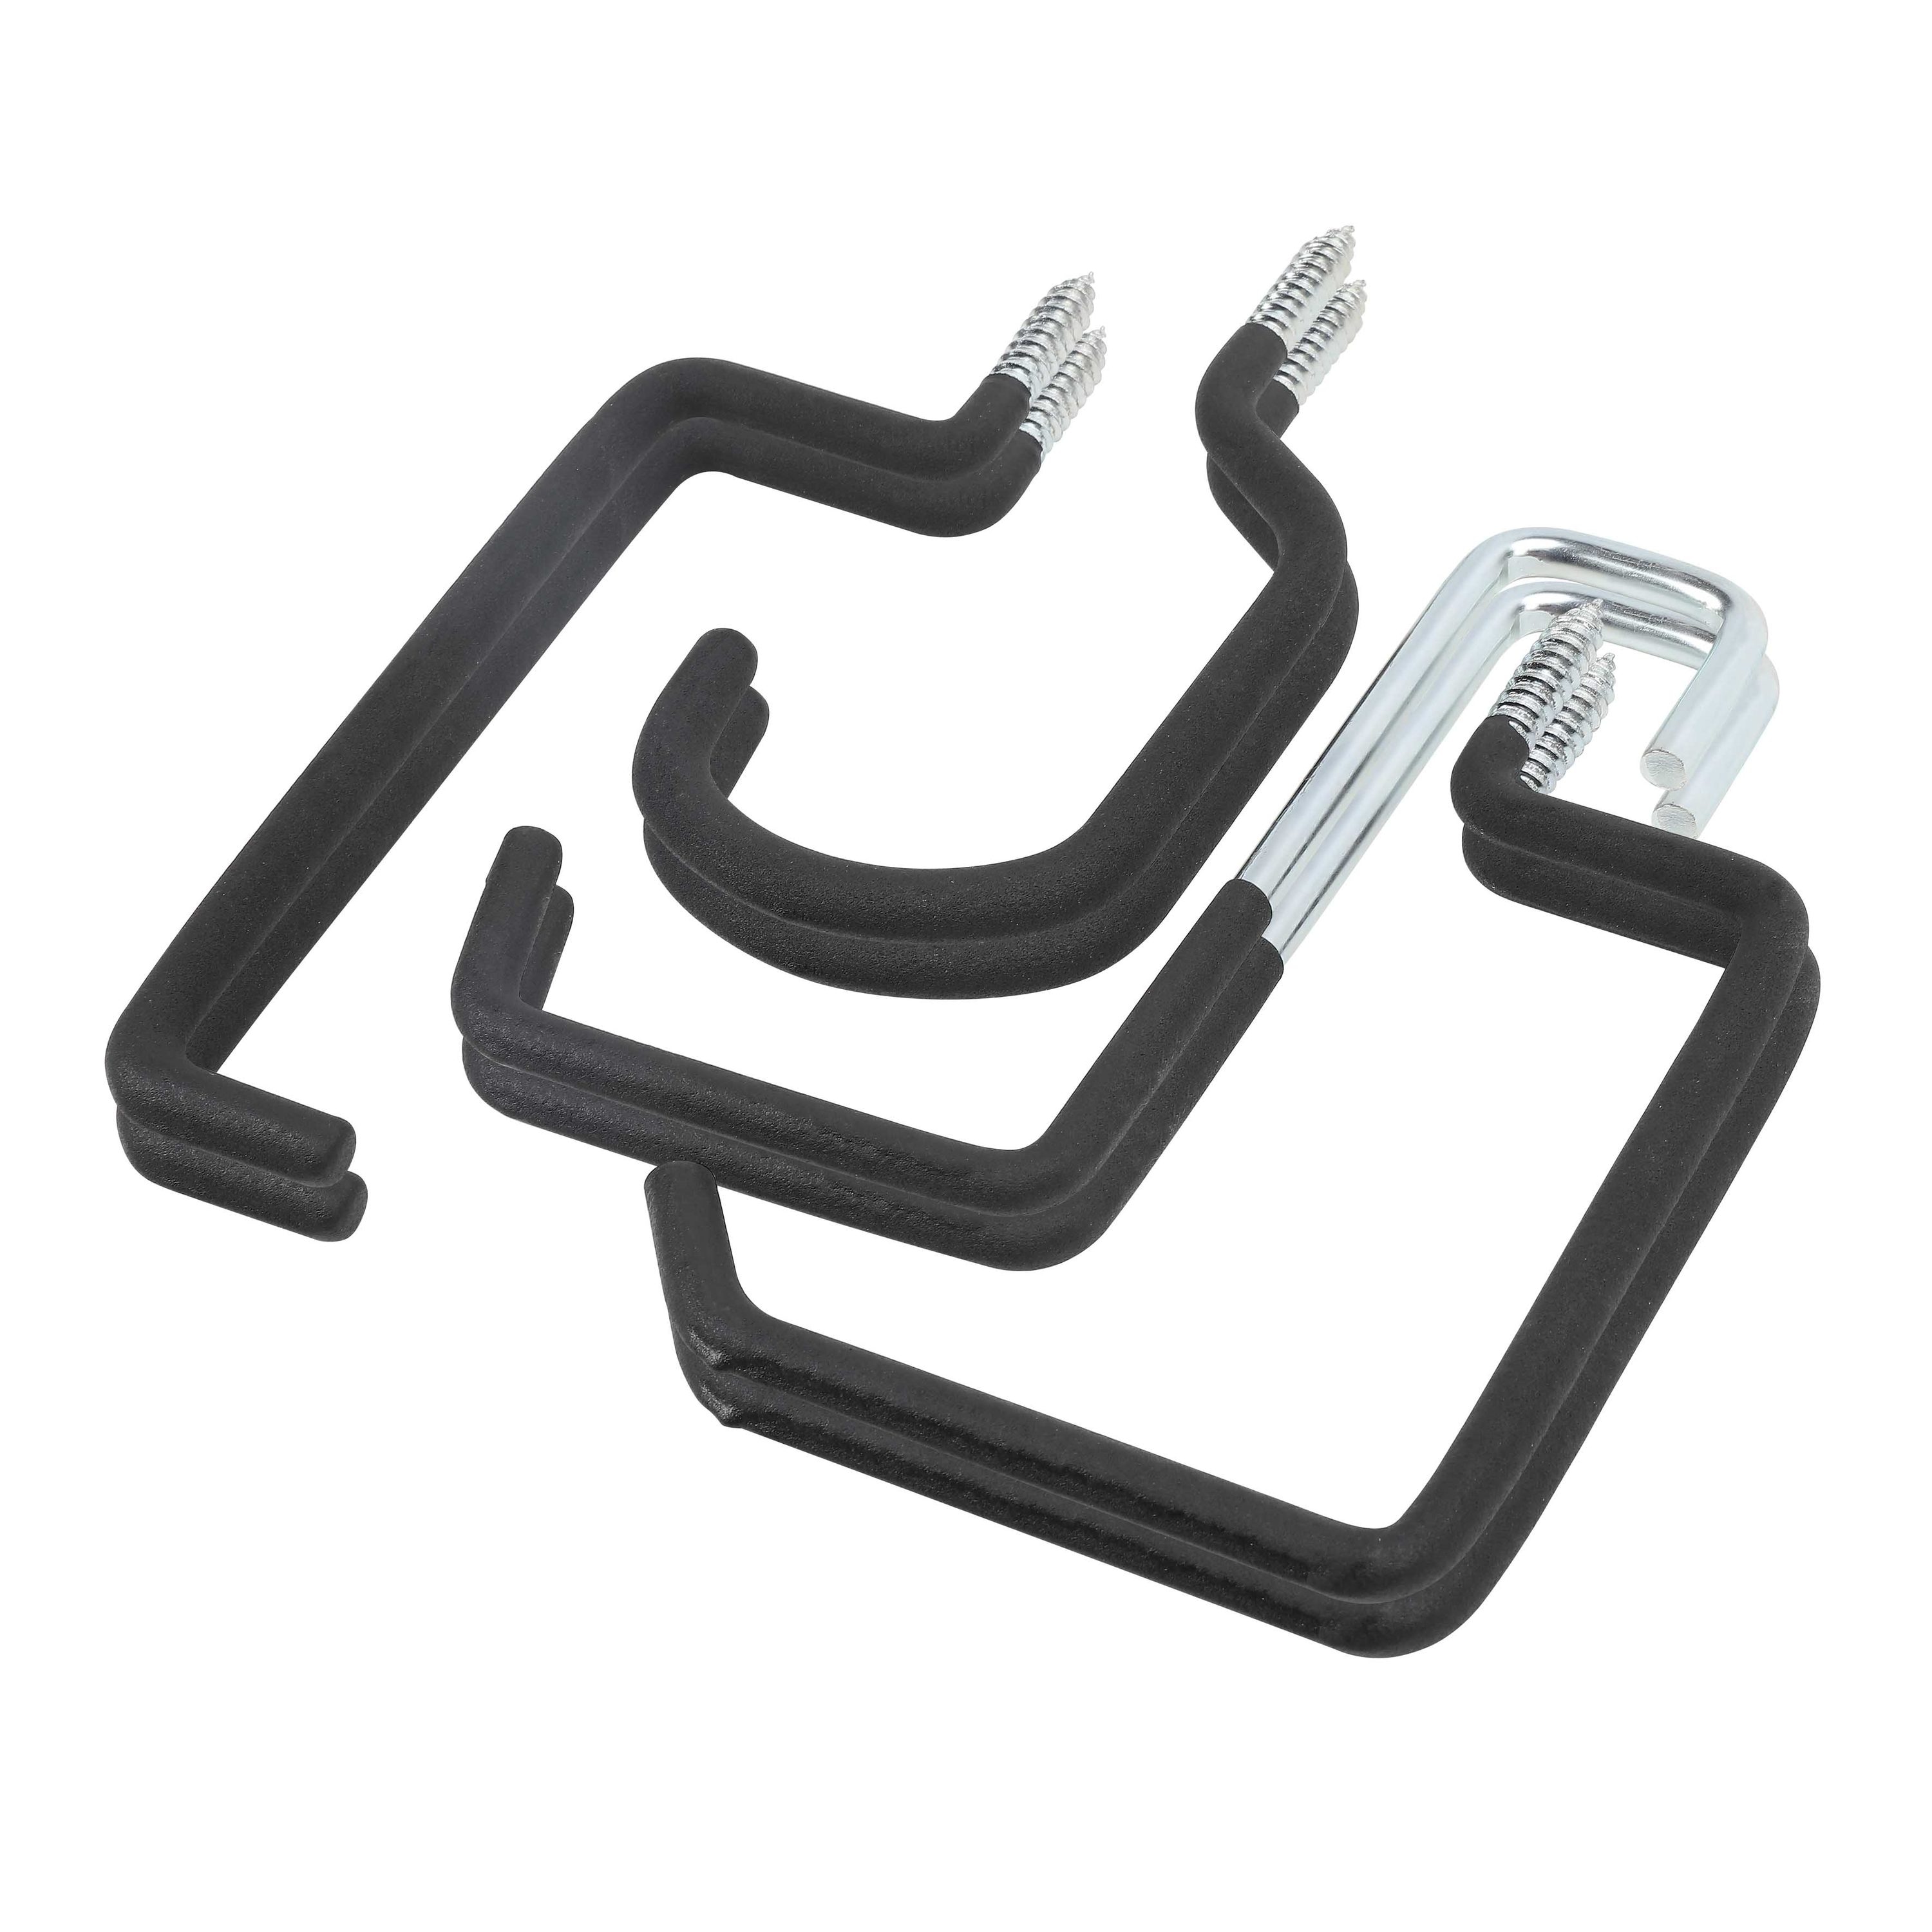  (4-Pack) Multi-Purpose Plastic Utility Hook Attachment